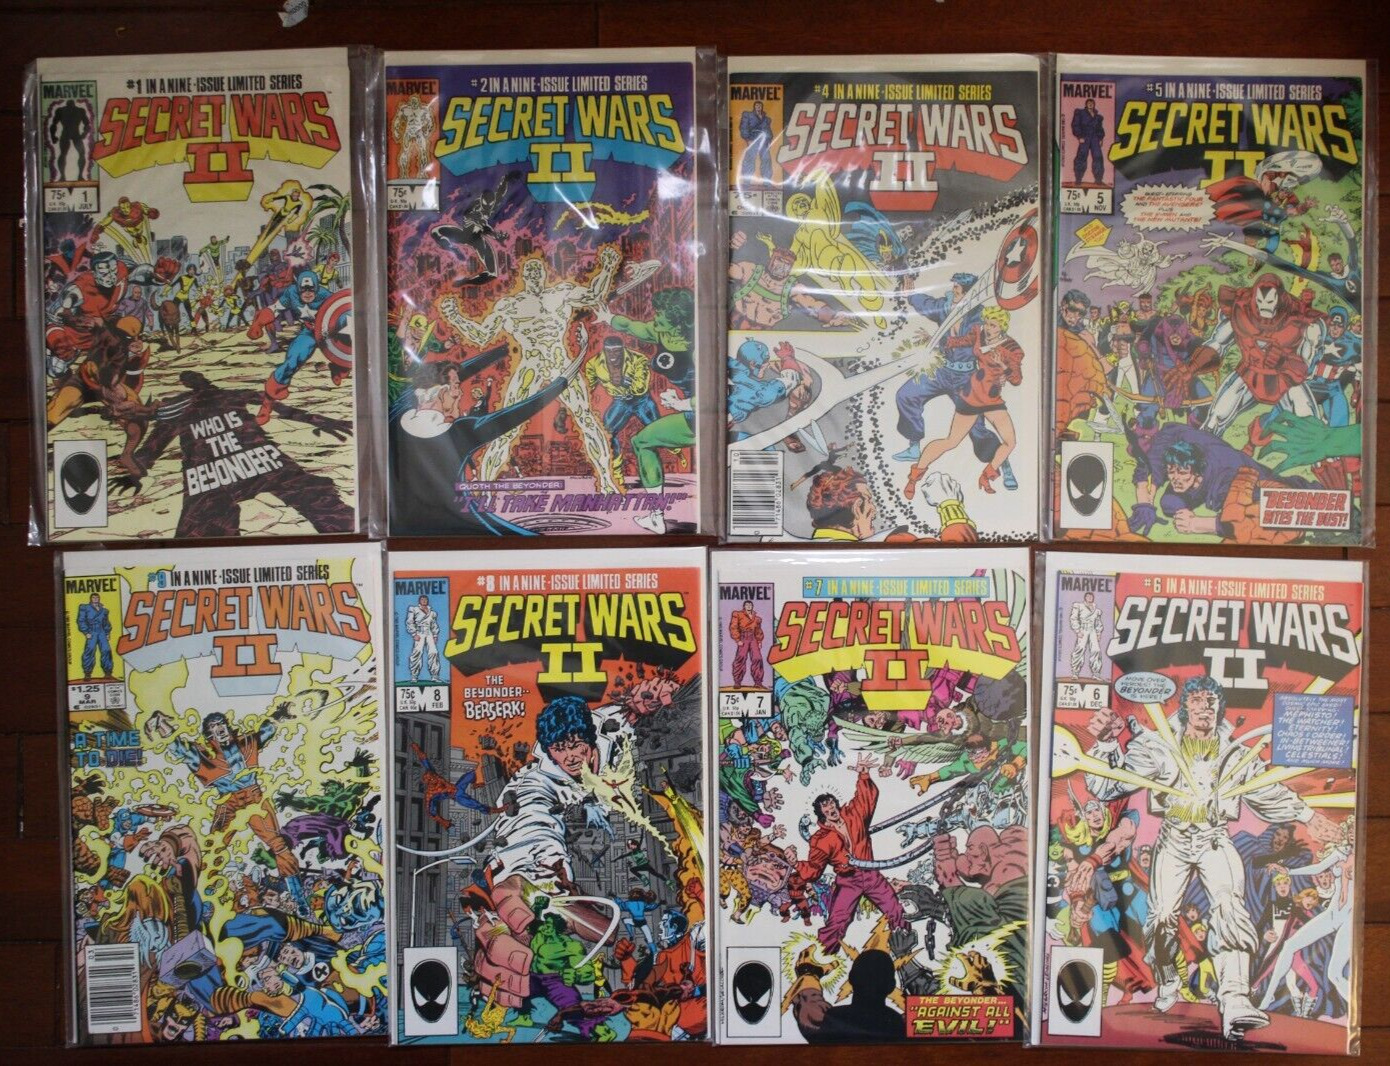 Secret Wars II #1-9 Complete Set Lot (1985 Marvel Comics) 1-9 (Issue 3 missing)